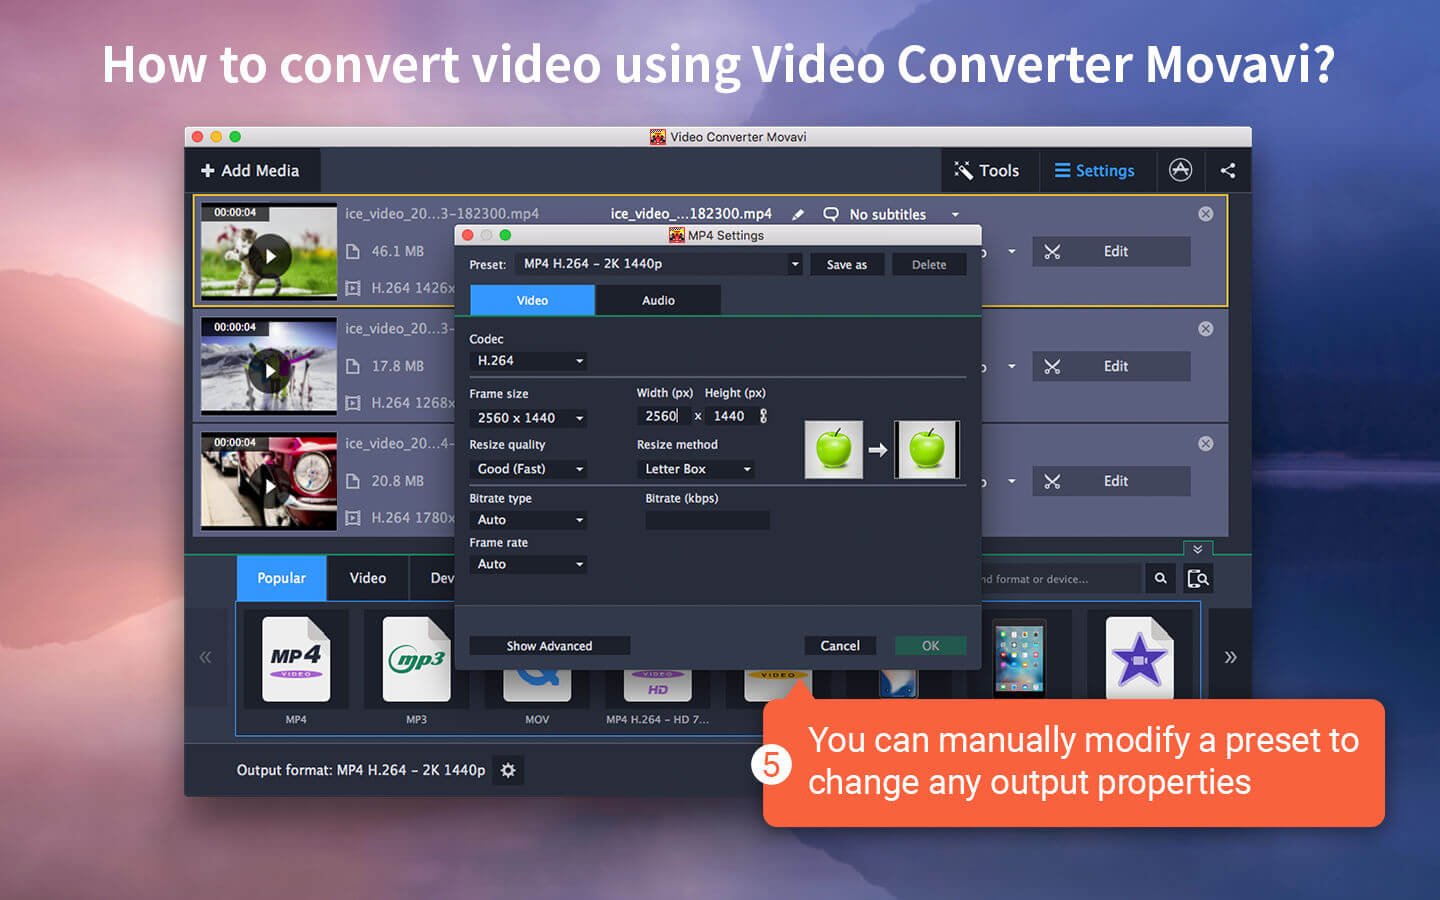 freemake video converter 4.0.3 download